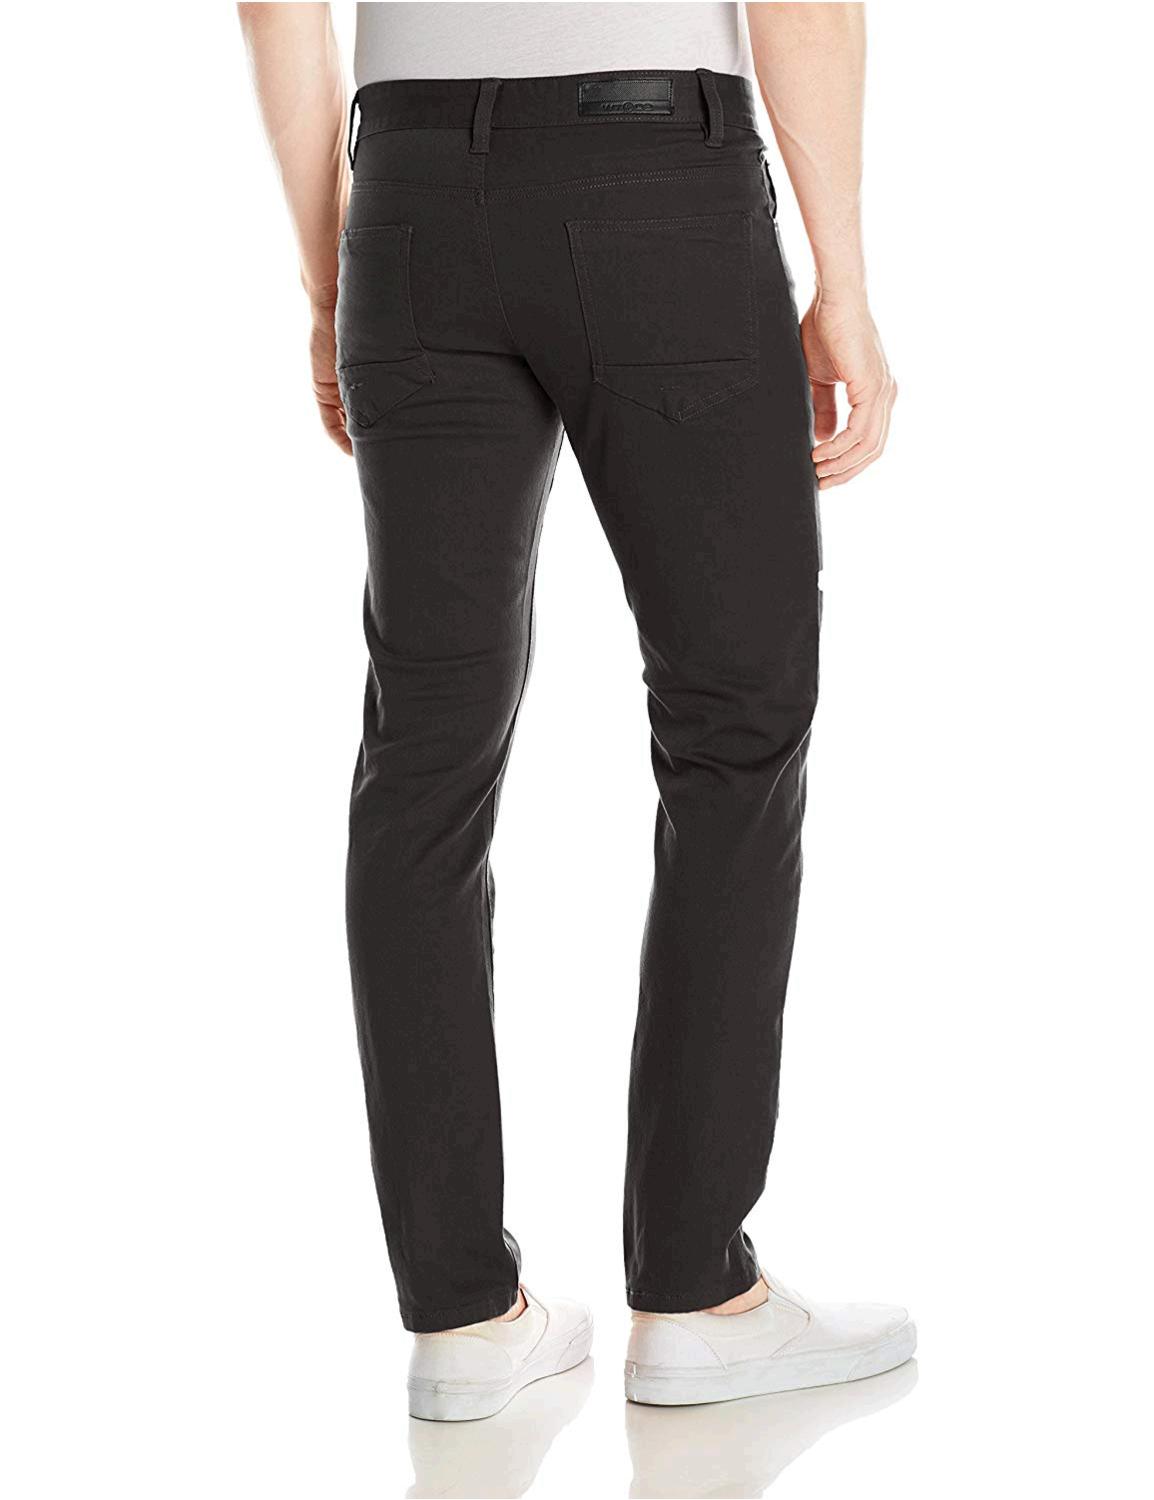 WT02 Men's Basic Color Twill Stretch Span Pants,, Black(new), Size 38W ...